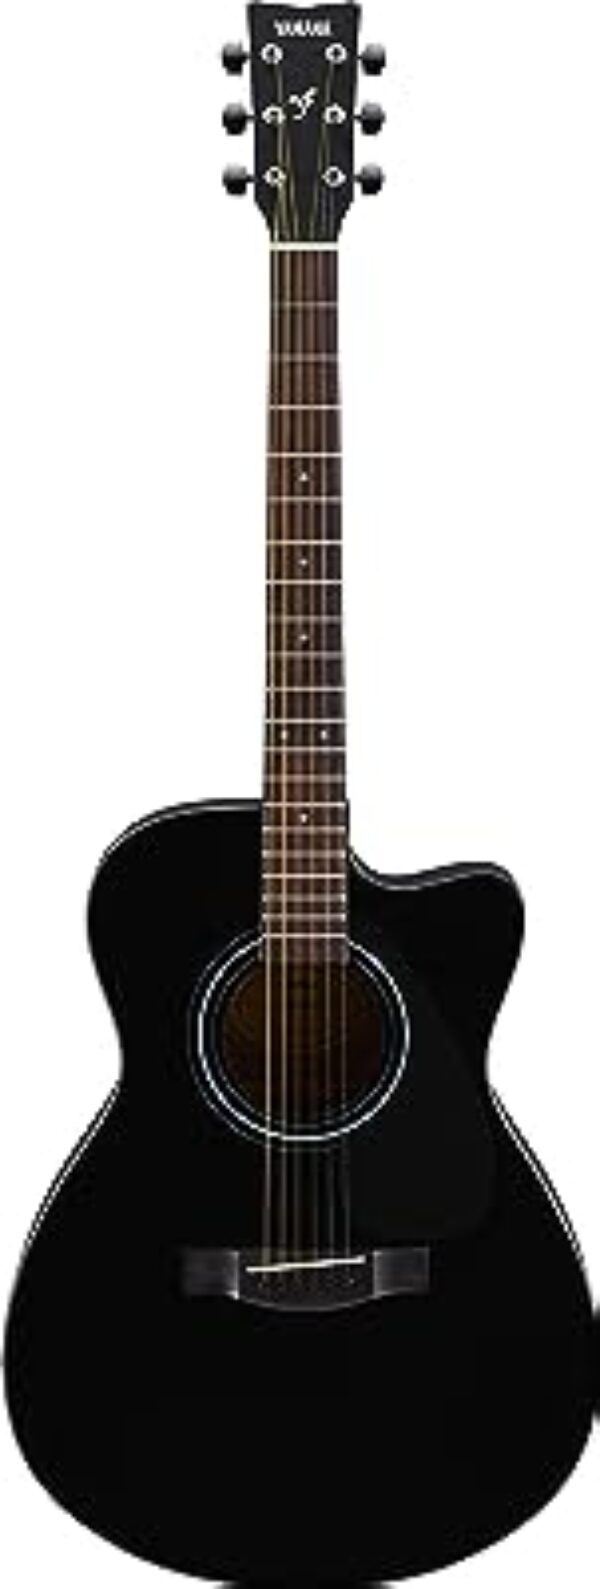 Yamaha FS80C Black Concert Cutaway Guitar